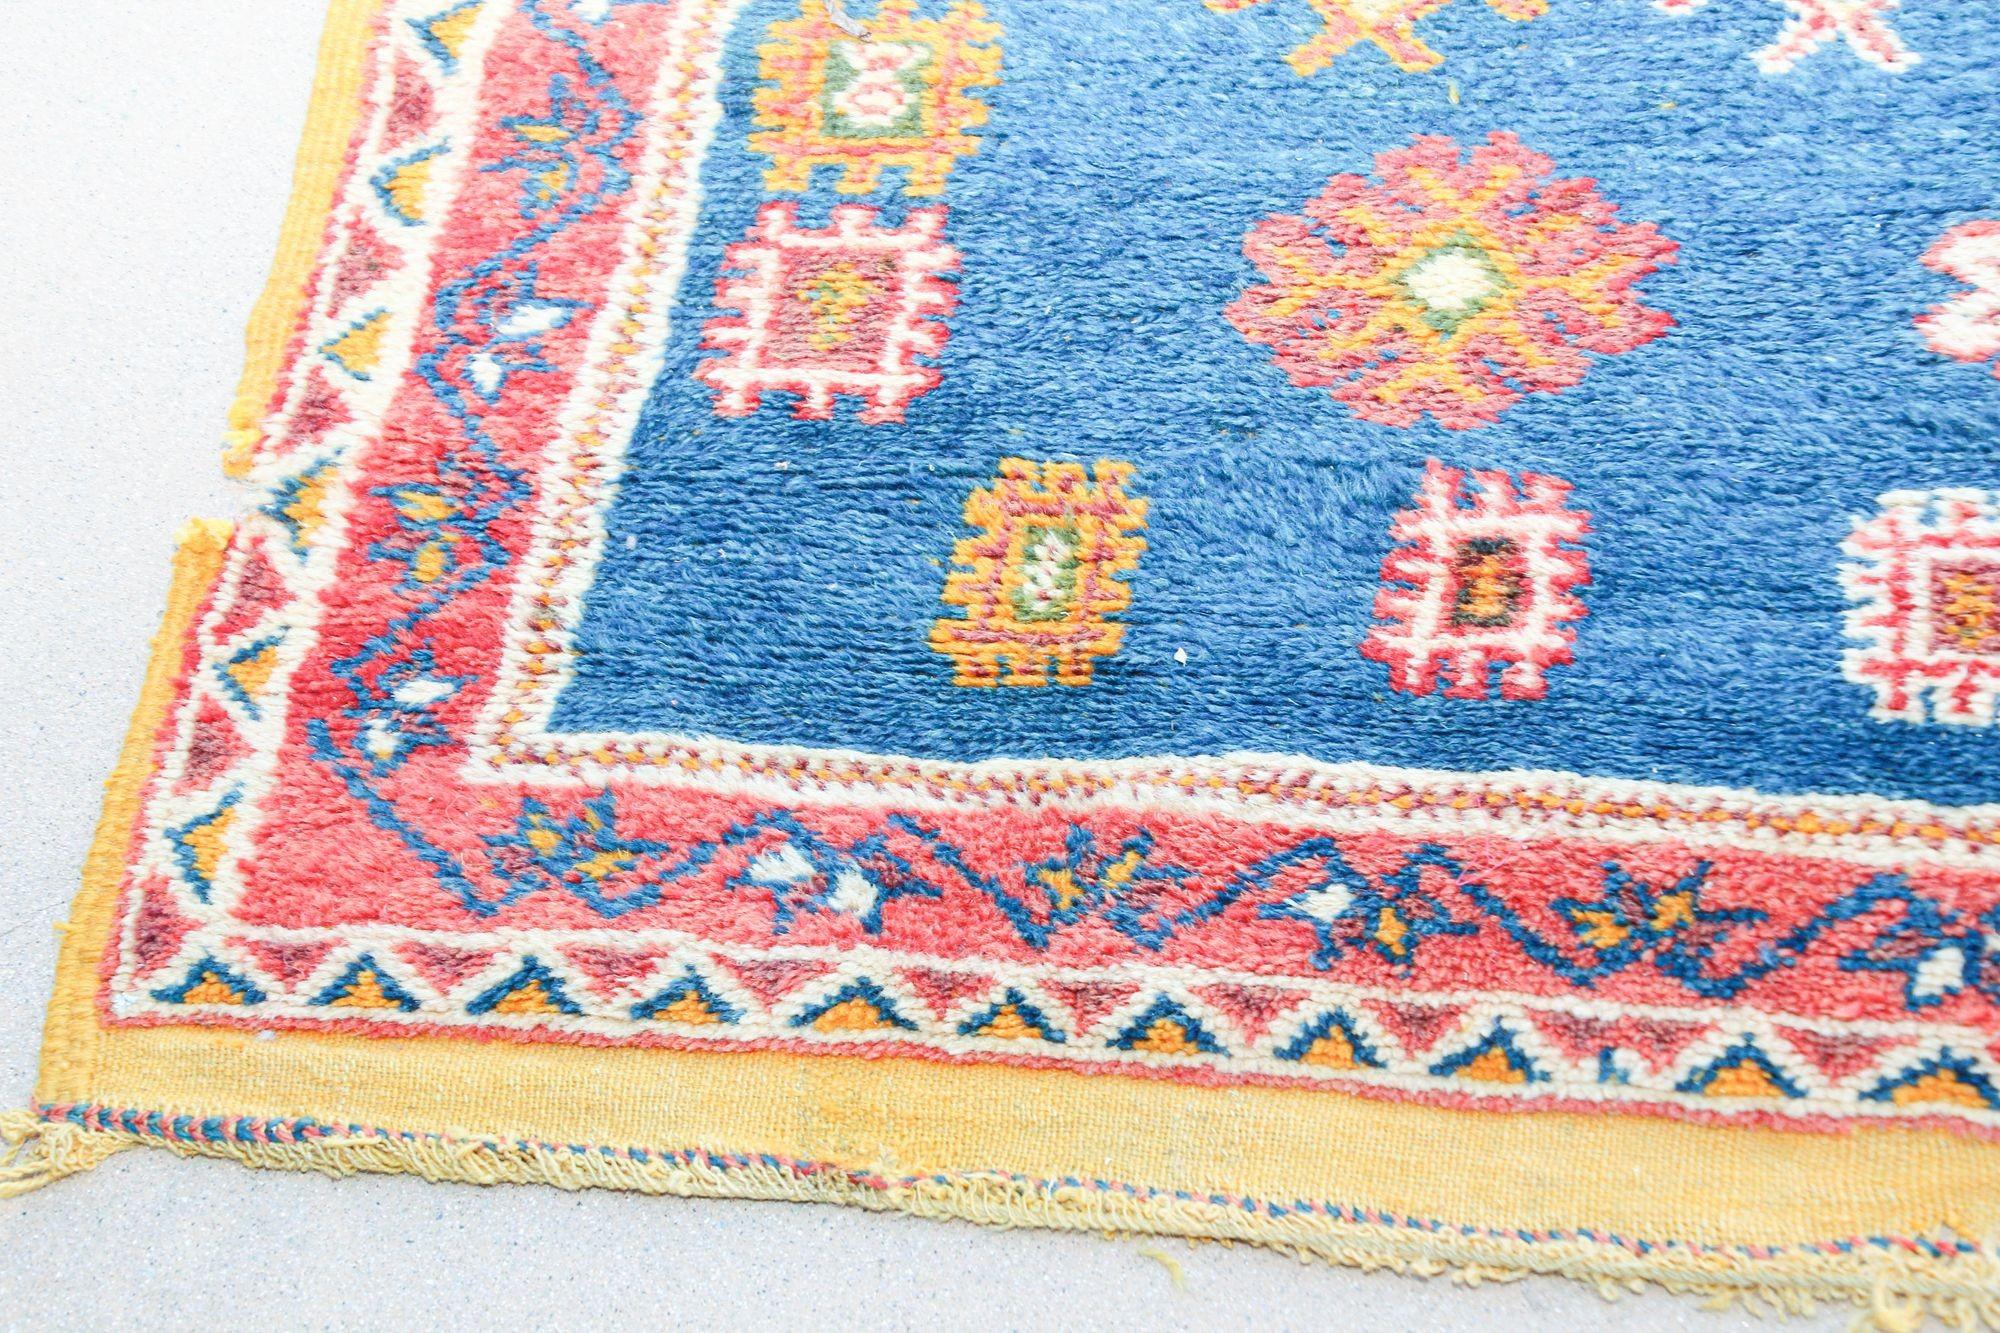 Folk Art 1960s Moroccan Berber Rug in Royal Blue, Pink and Orange Colors For Sale